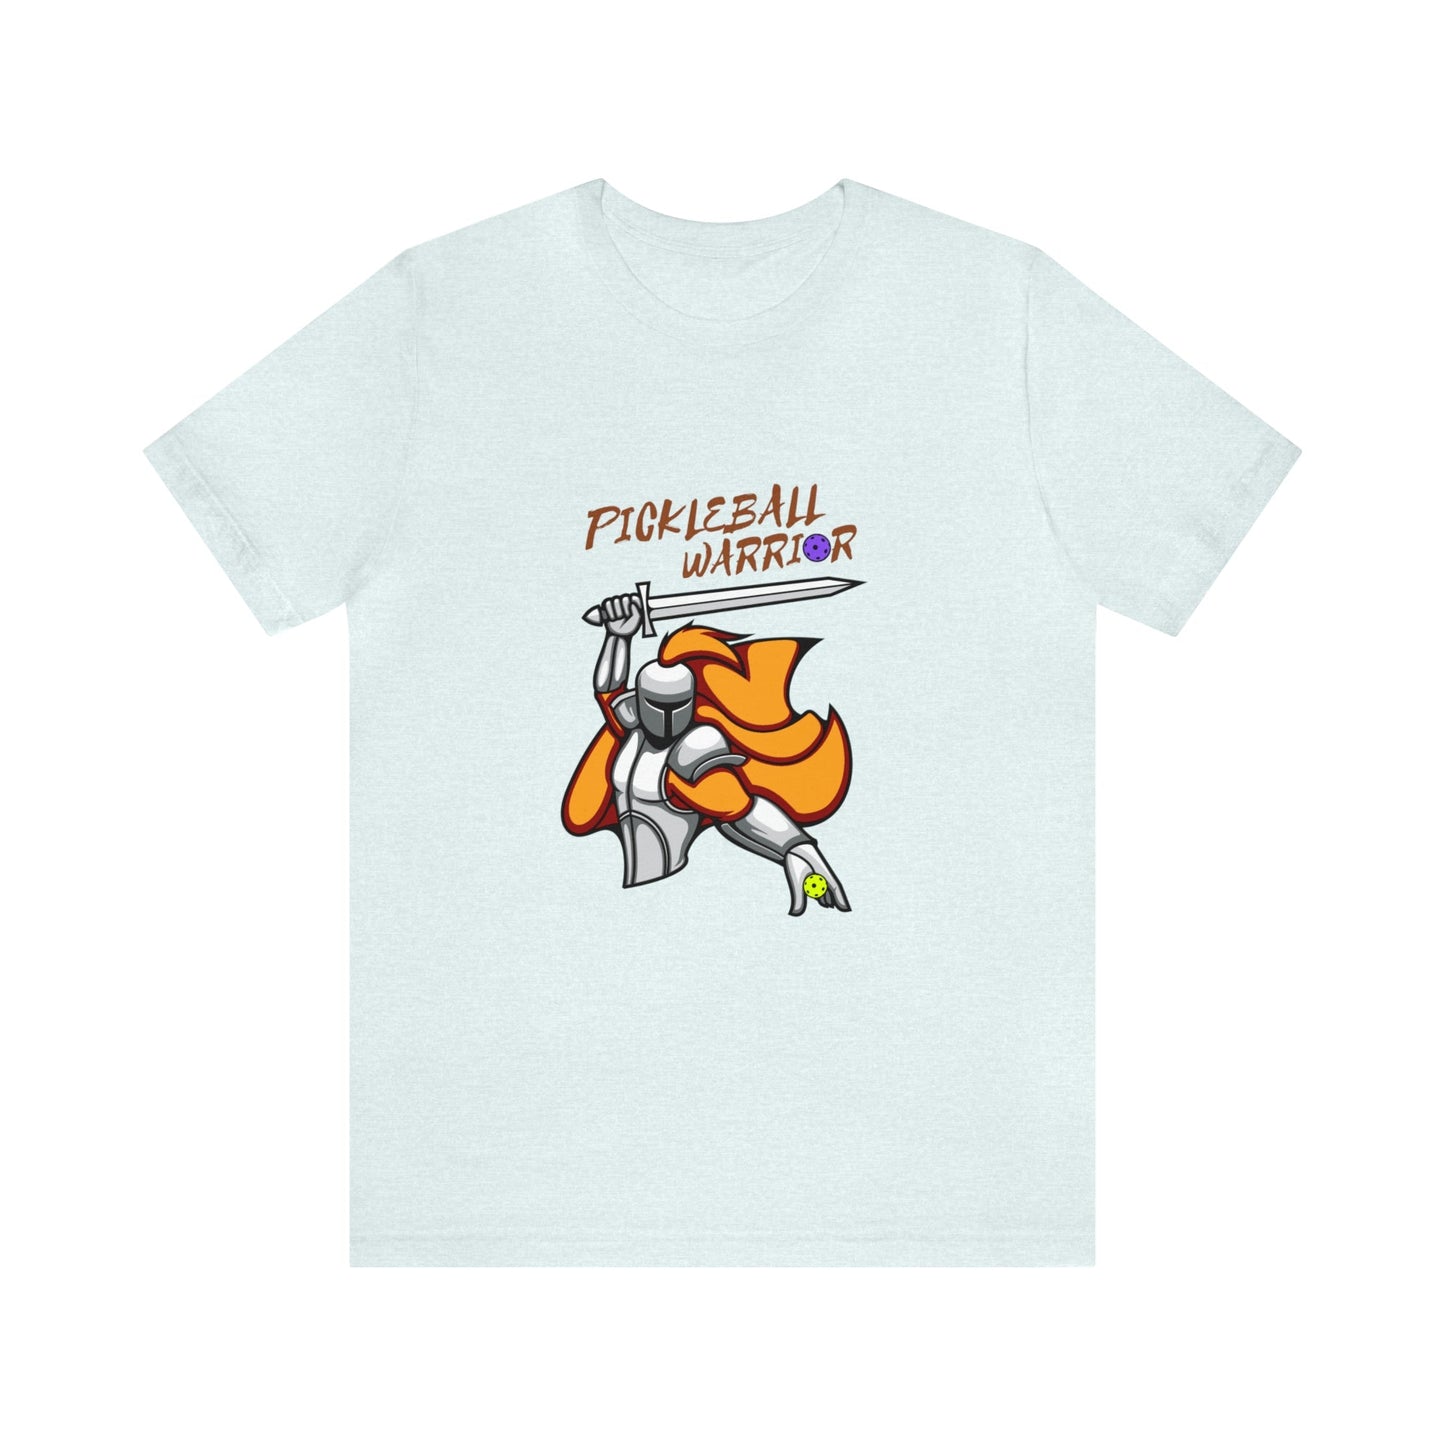 'Pickleball Warrior' T-Shirt